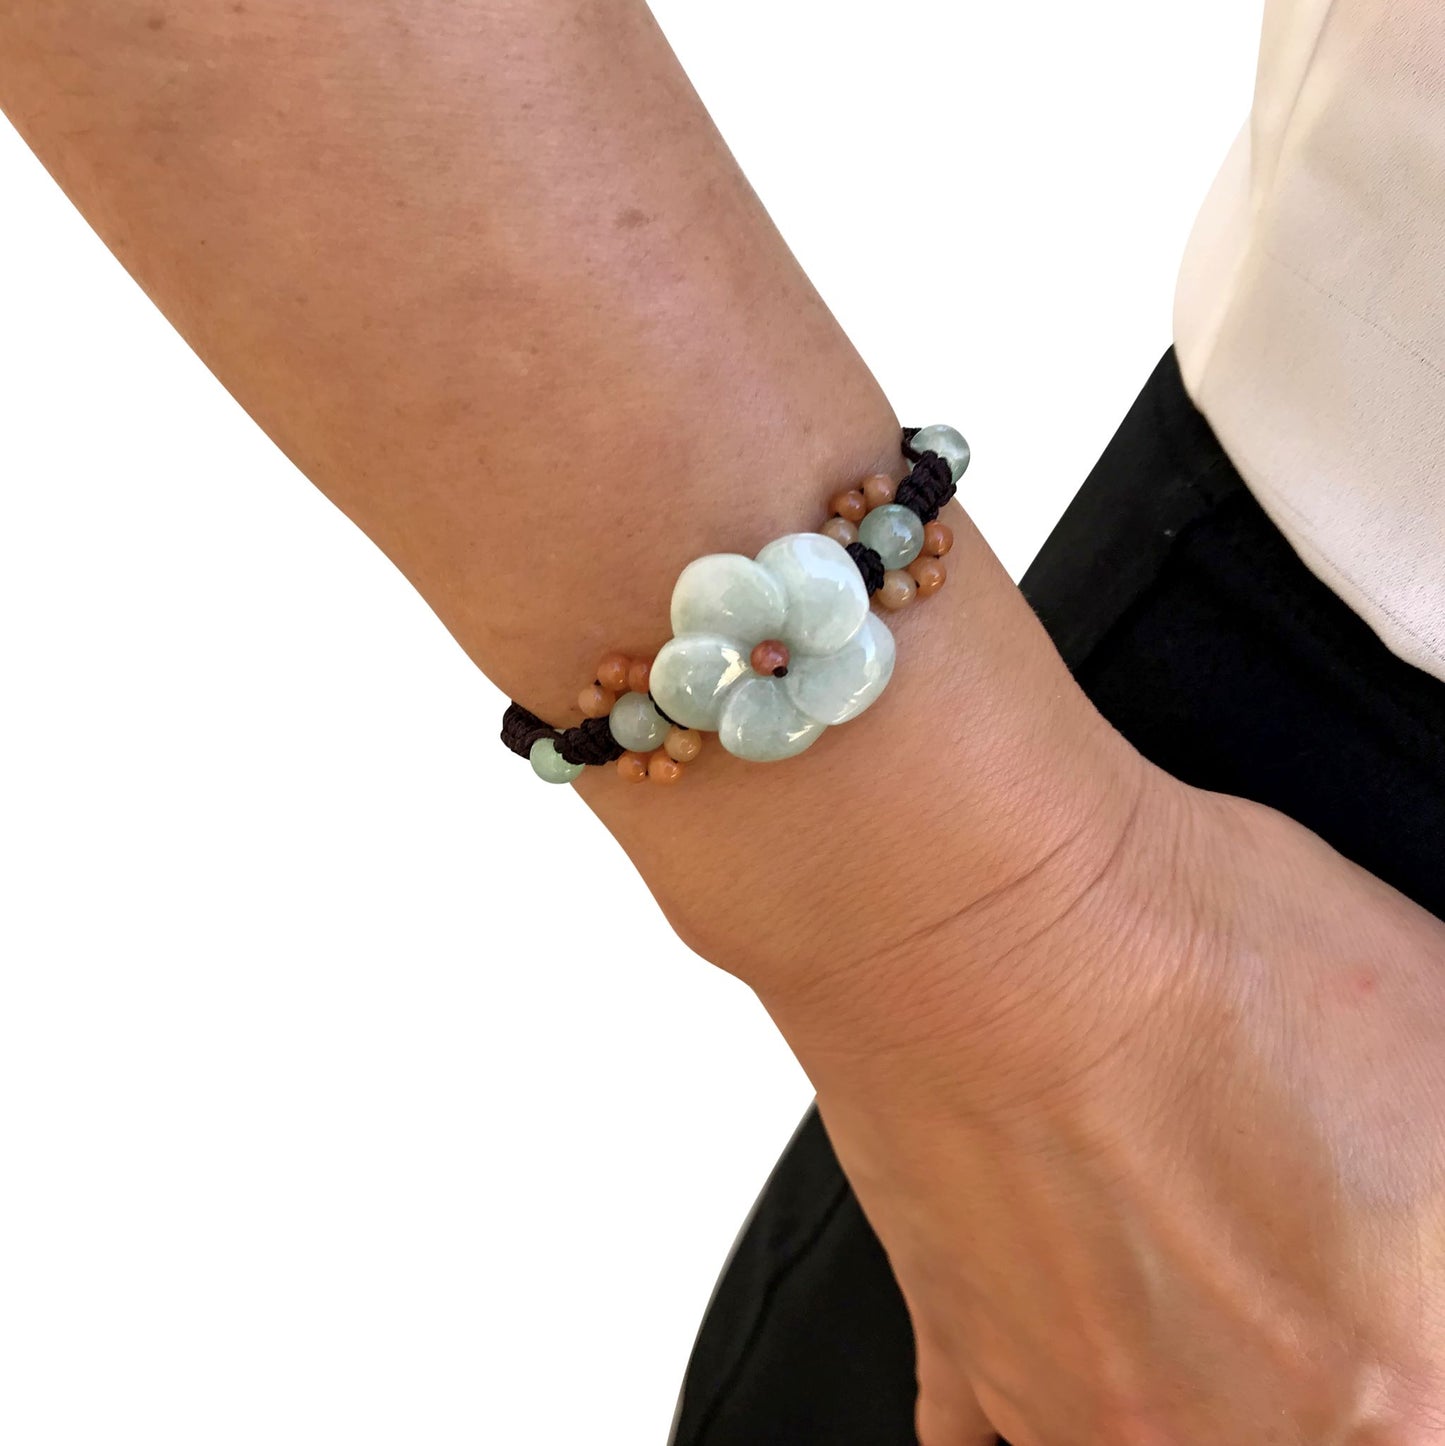 Enjoy a Unique & Stylish Look with the Evening Primrose Flower Bracelet